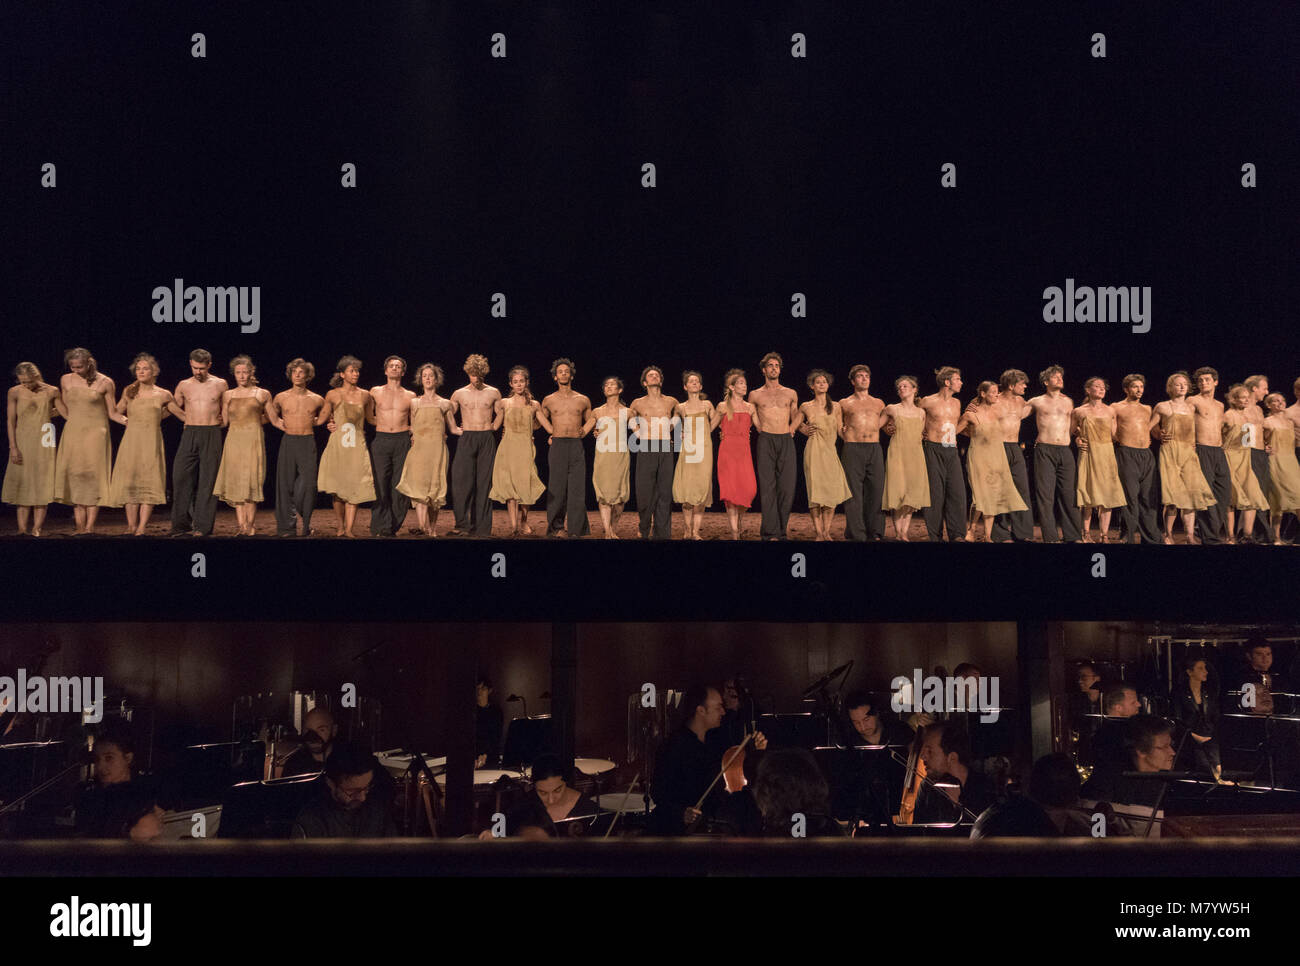 curtain call for ballet performance of Stravinsky's  The Rite of Spring (Le Sacre du printemps) at Palais Garnier opera house, Paris, France Stock Photo